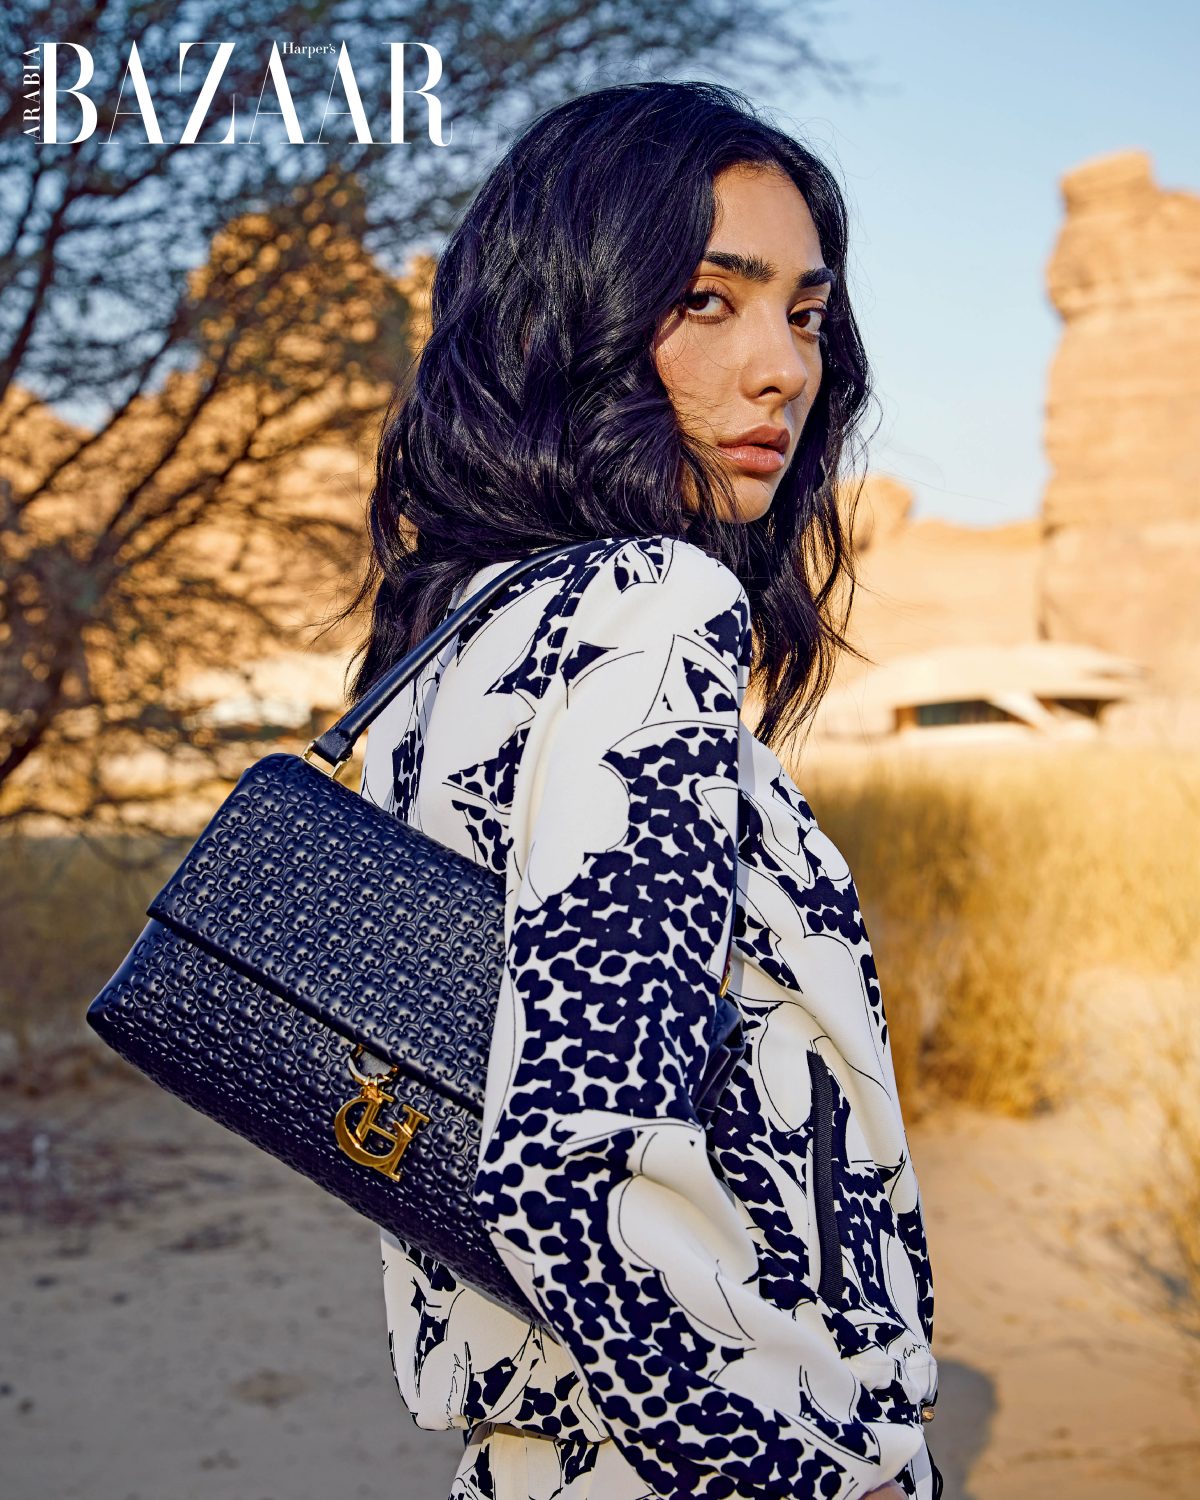 CH Carolina Herrera's Handbag Collections l Vogue Arabia